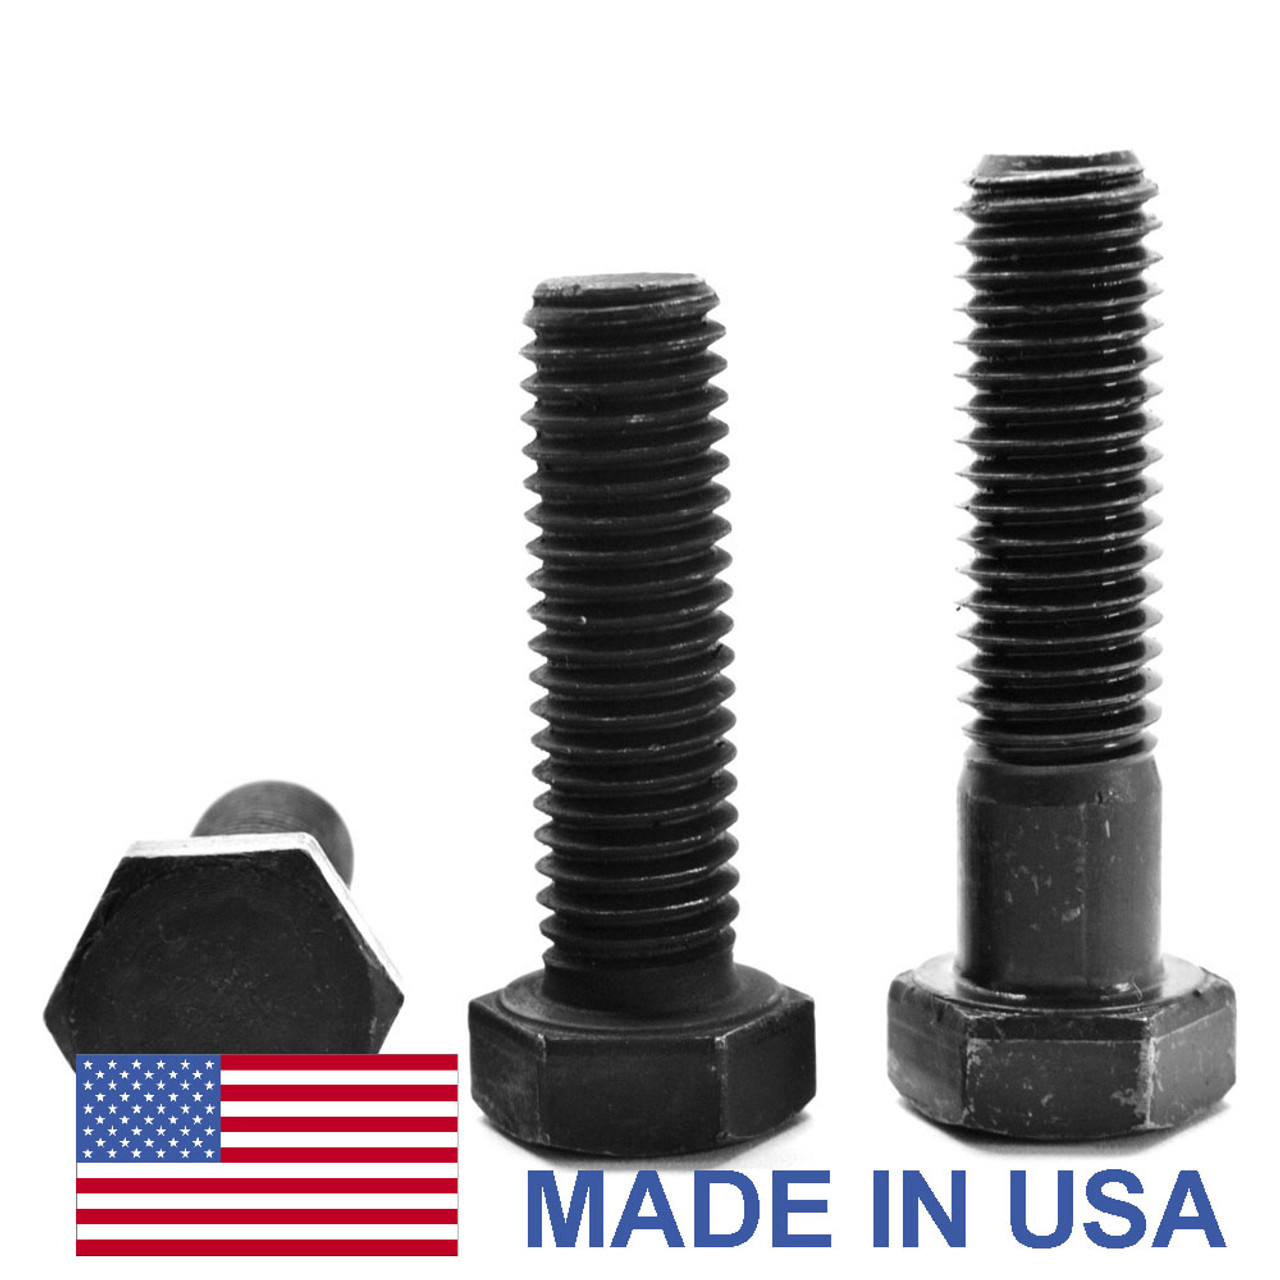 1"-8 x 4 1/2" (PT) Coarse Thread Grade 8 Hex Cap Screw (Bolt) - USA Alloy Steel Black Oxide